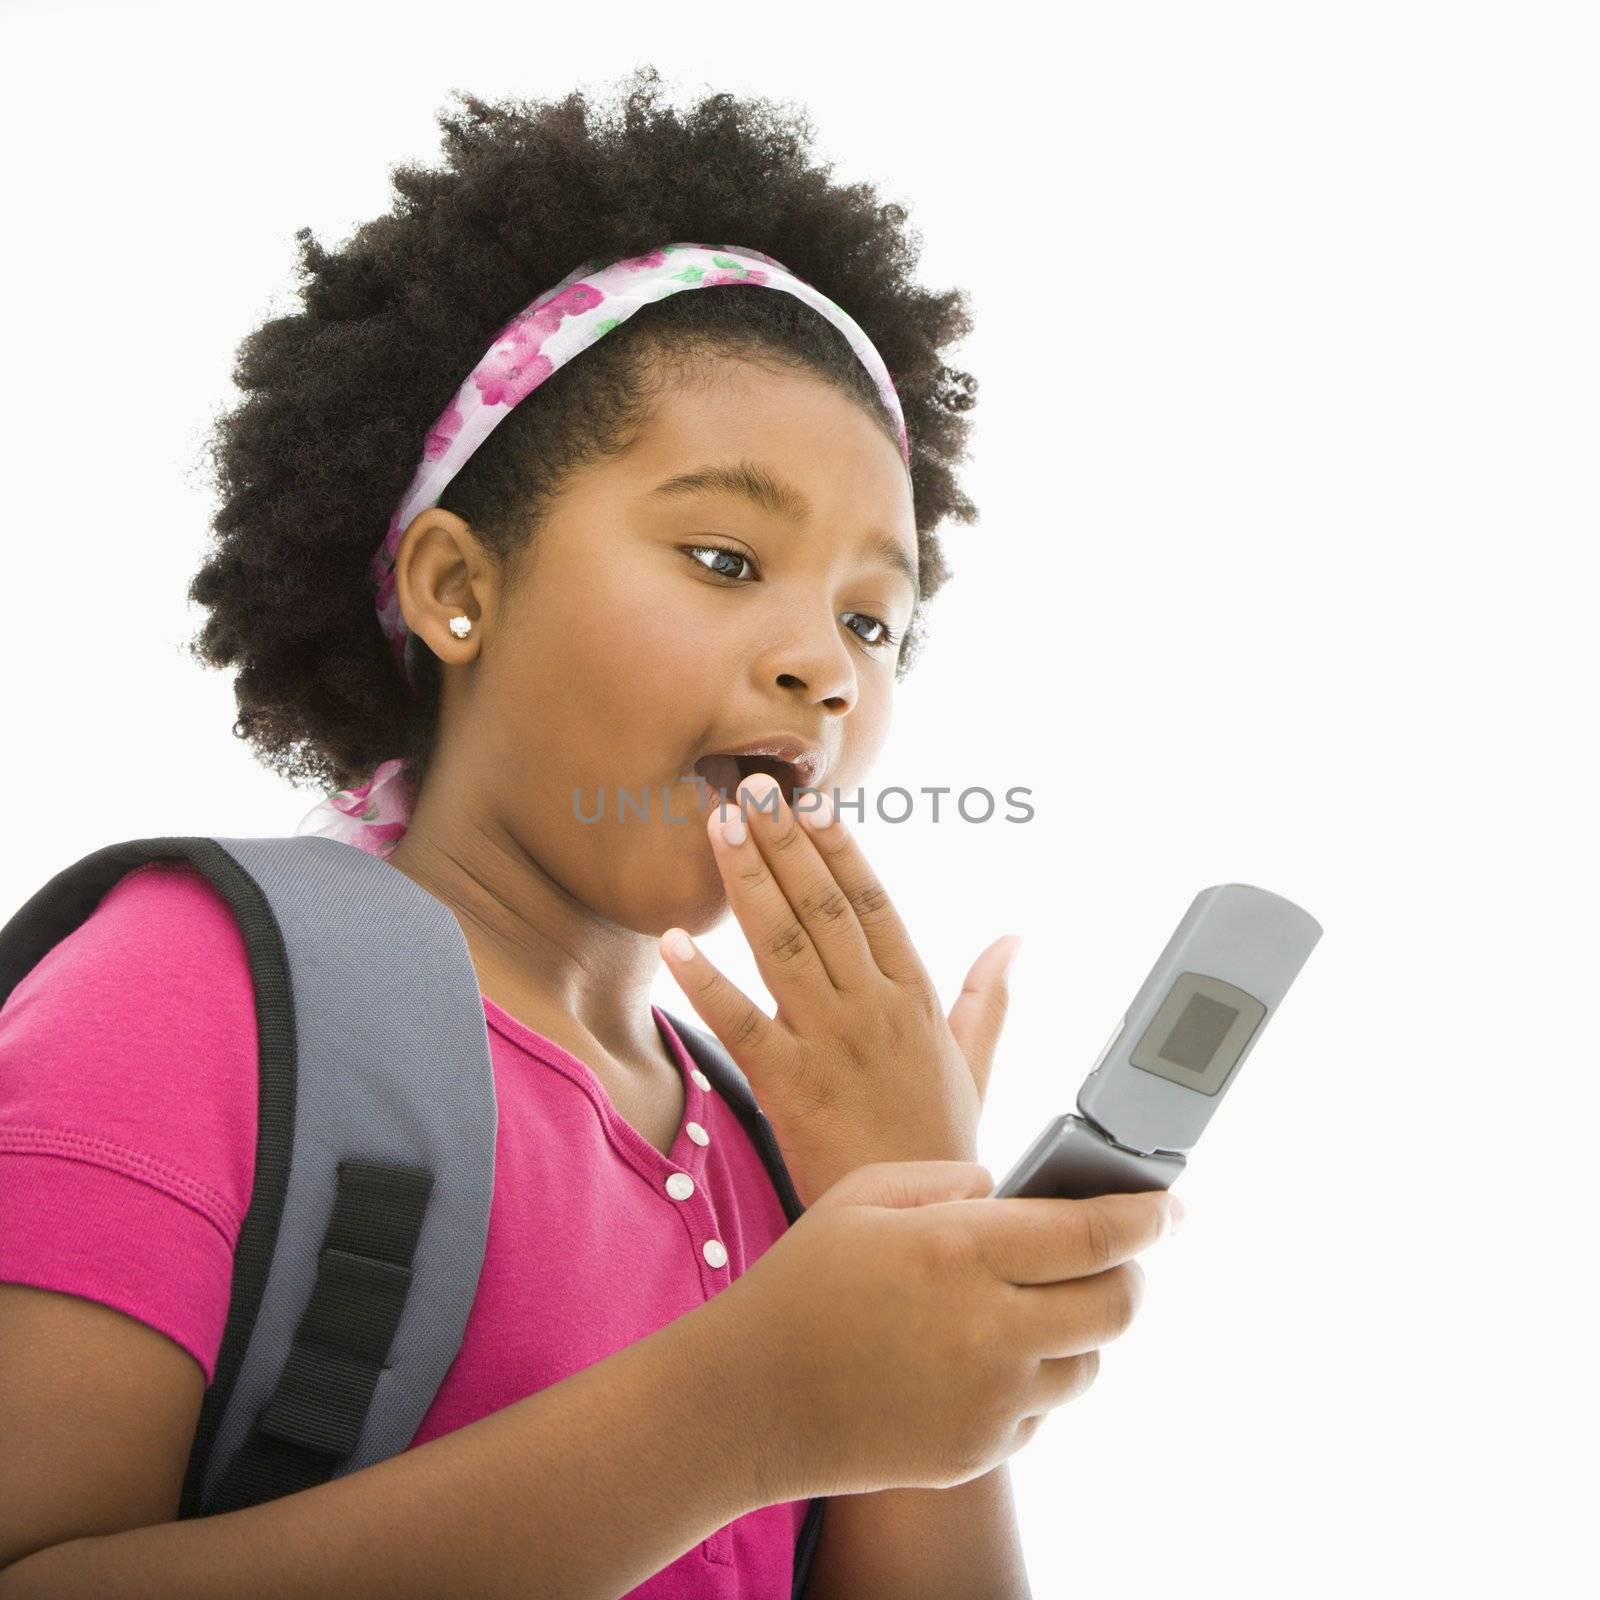 Surprised girl on phone. by iofoto